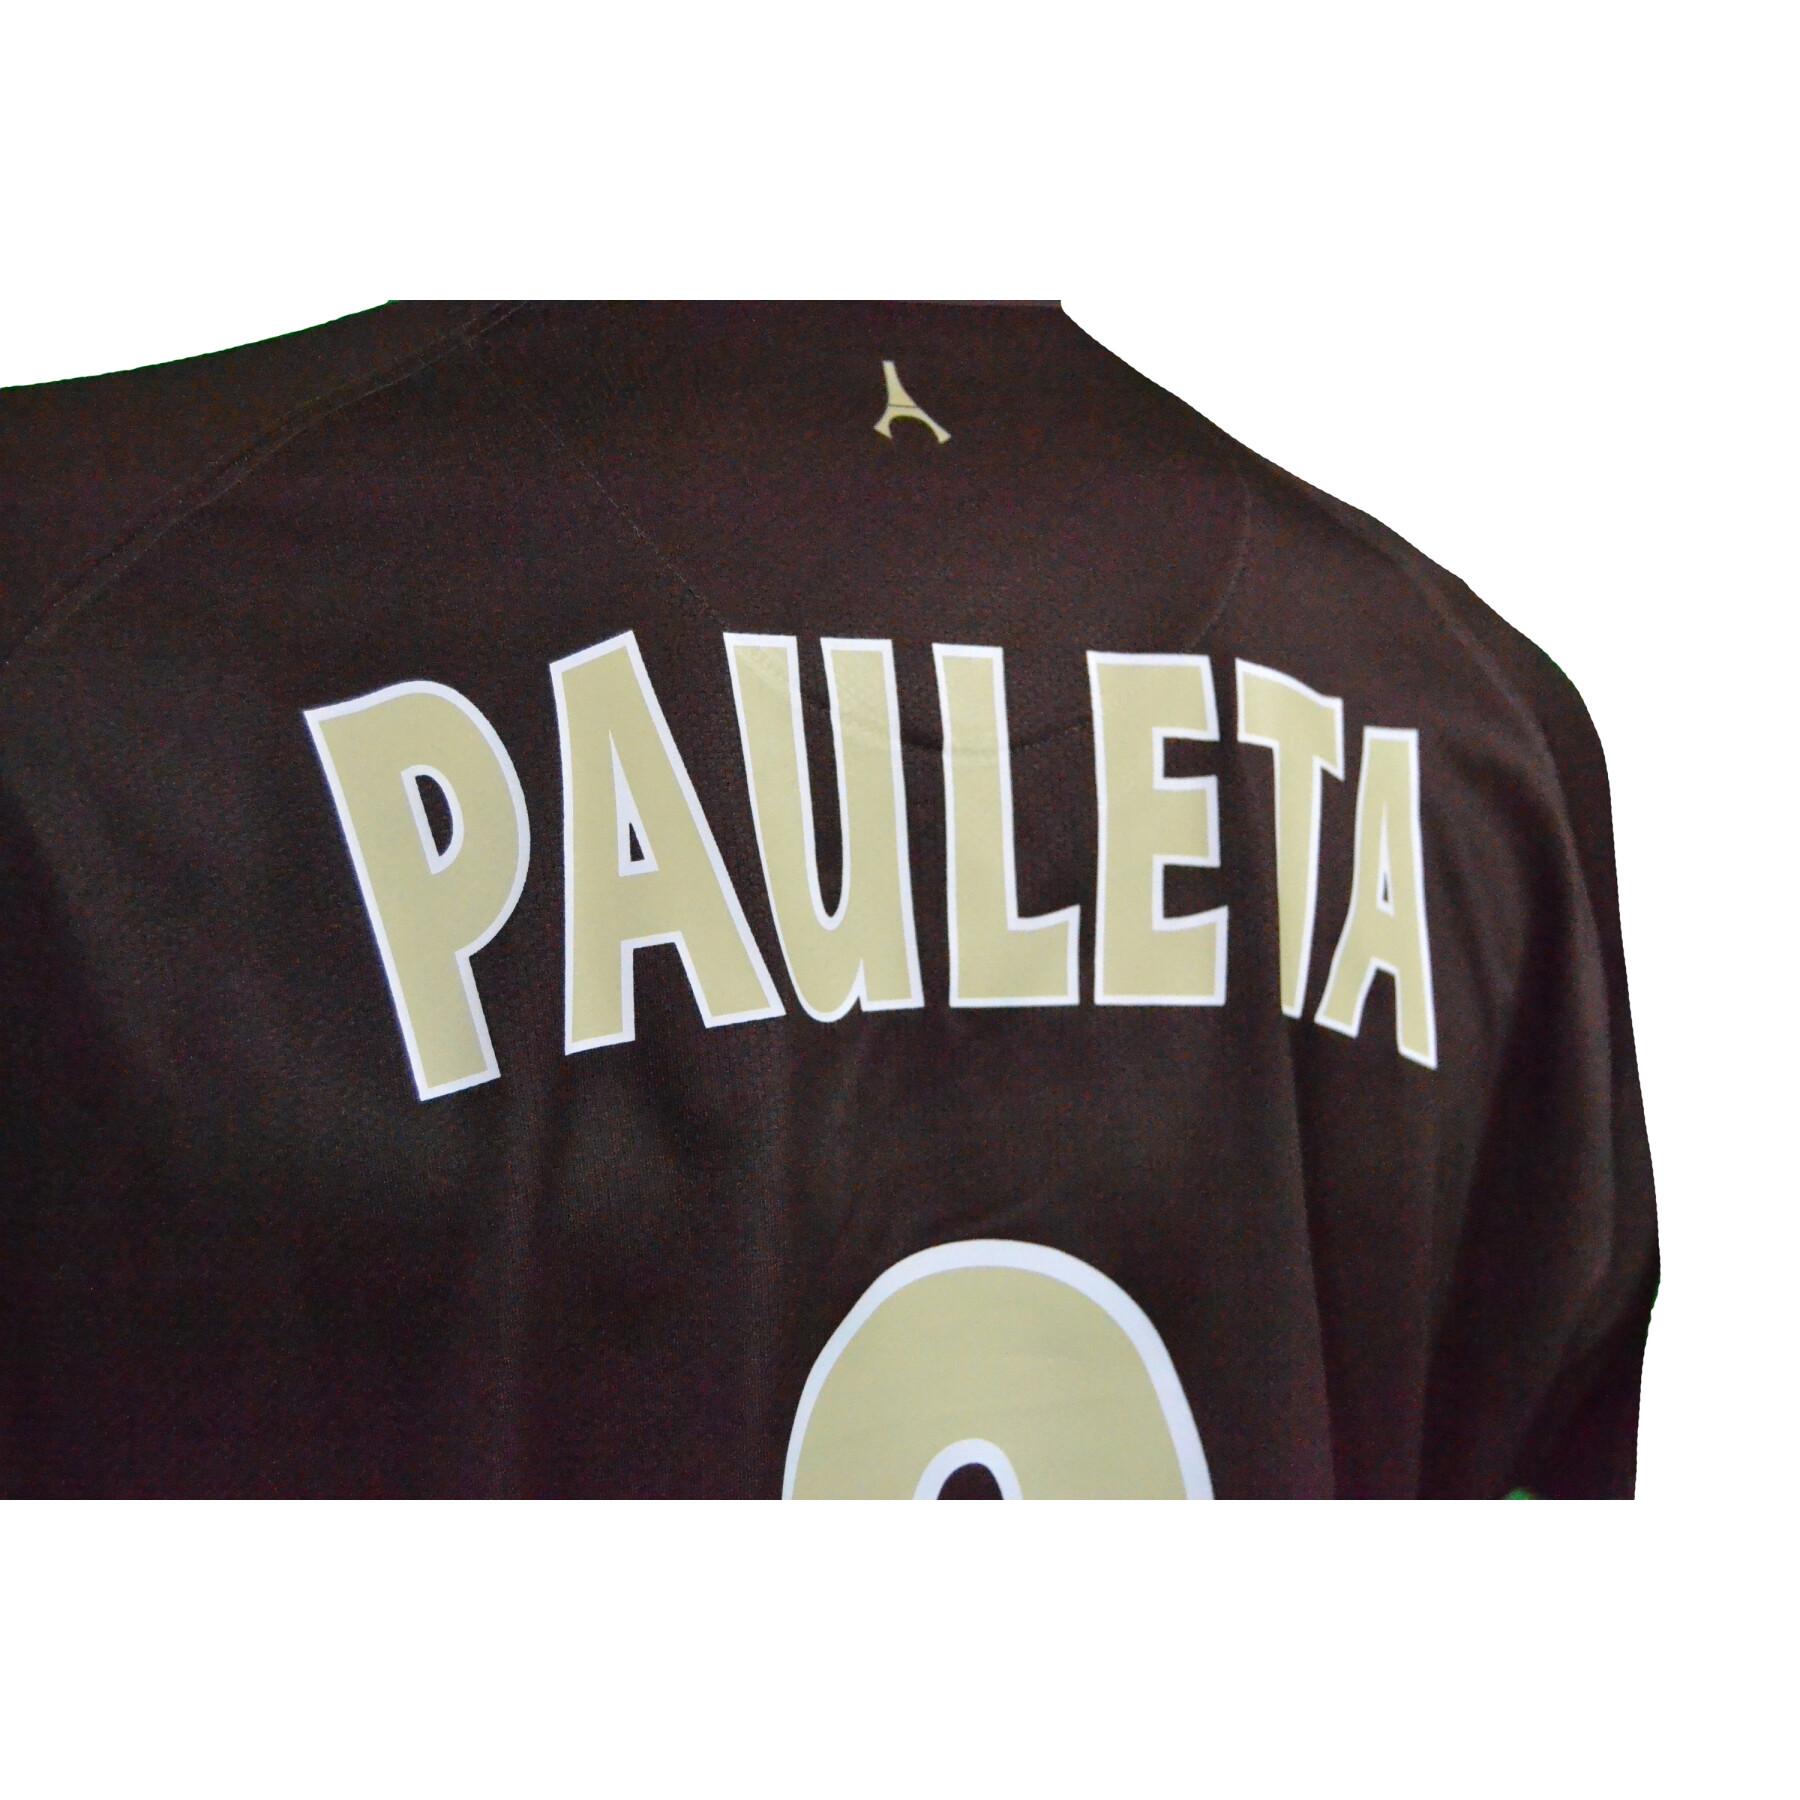 PSG 2006/07 Pauleta - Medium - YFS - Your Football Shirt